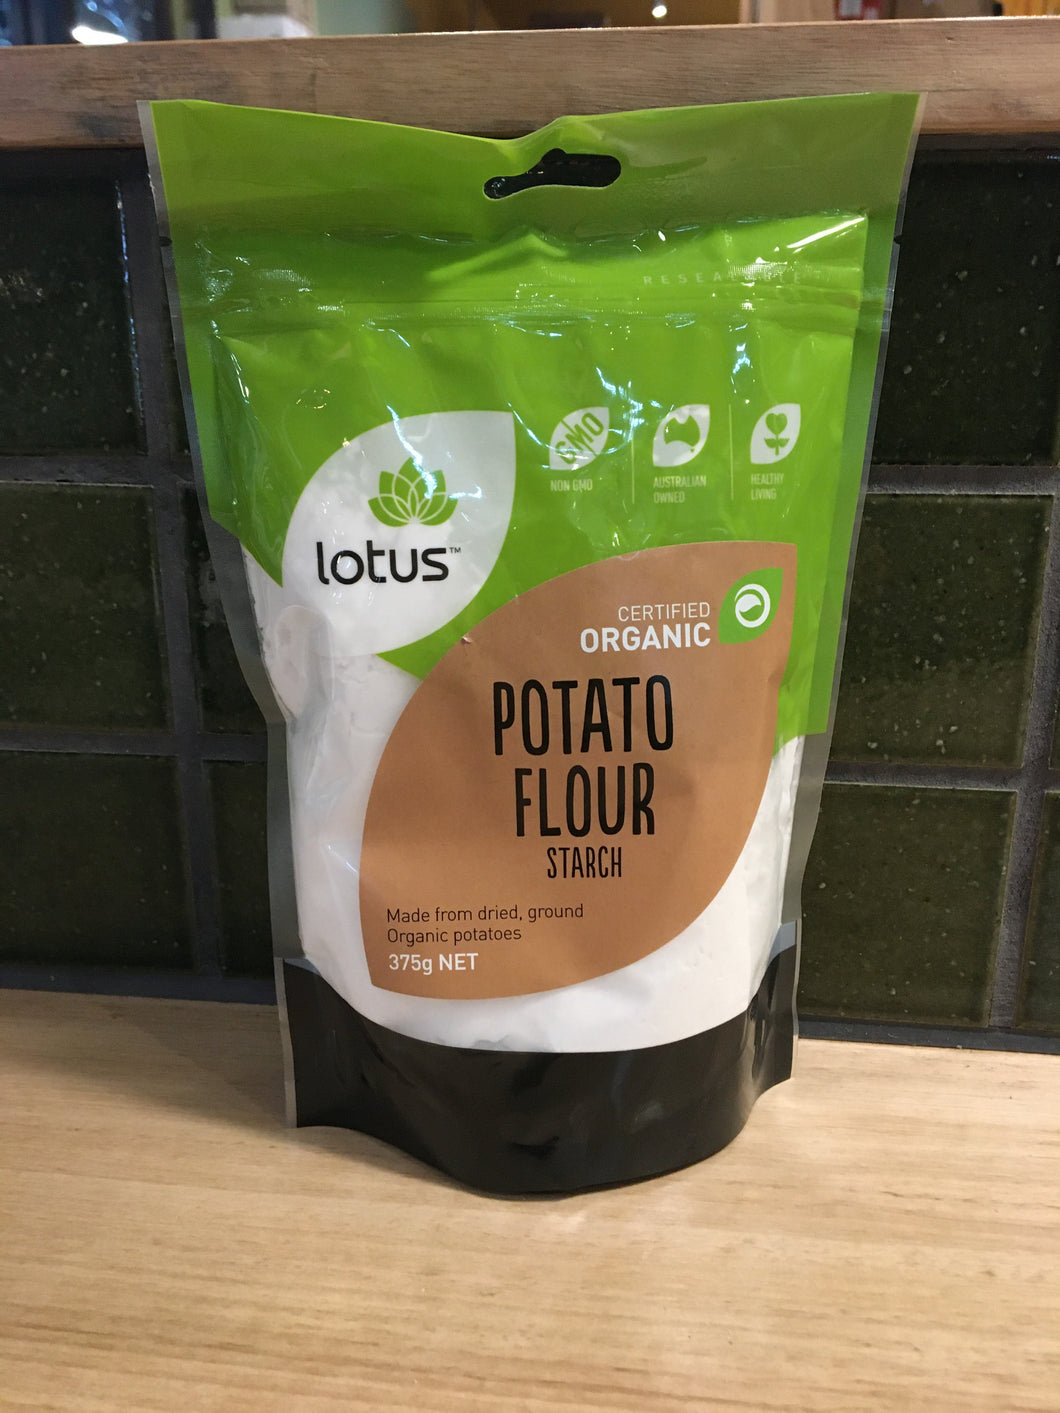 Lotus Potato Flour (Starch) - Organic 375g